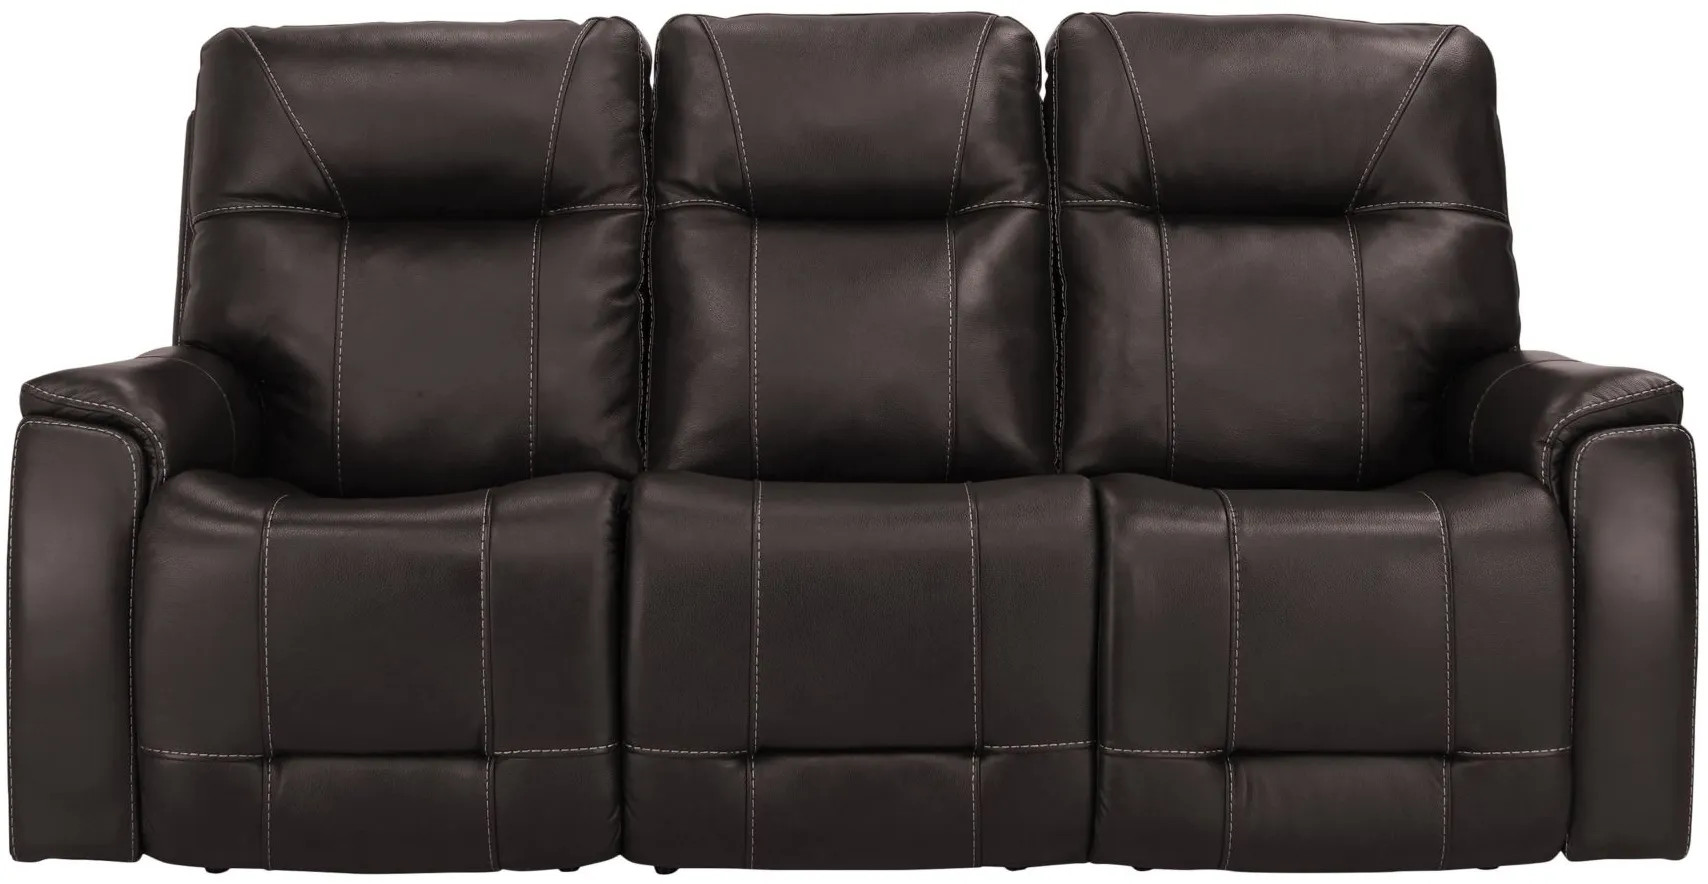 Barnett Leather Layflat Power Sofa w/ Power Headrest and Lumbar in Brown by Bellanest